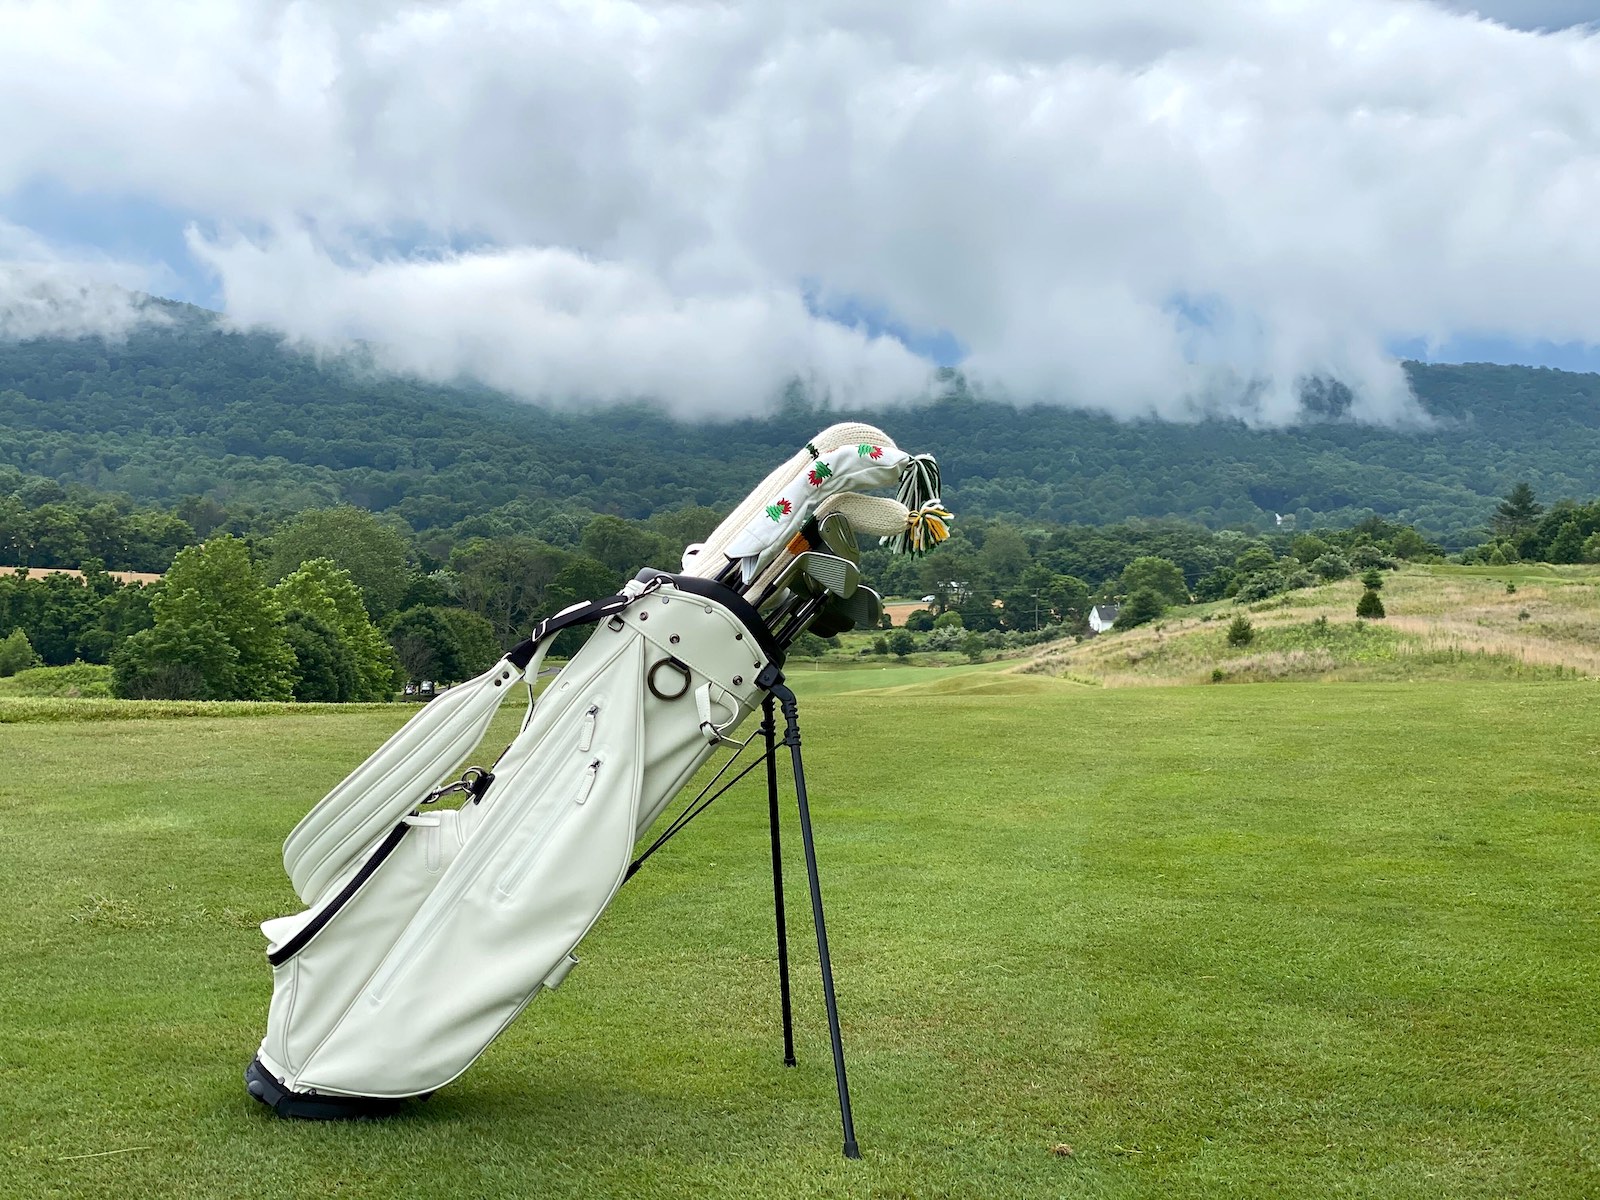 New Titleist Links Legend Golf Bag Navy/Cool  White/Black/Geen/Burgundy/Charcoal